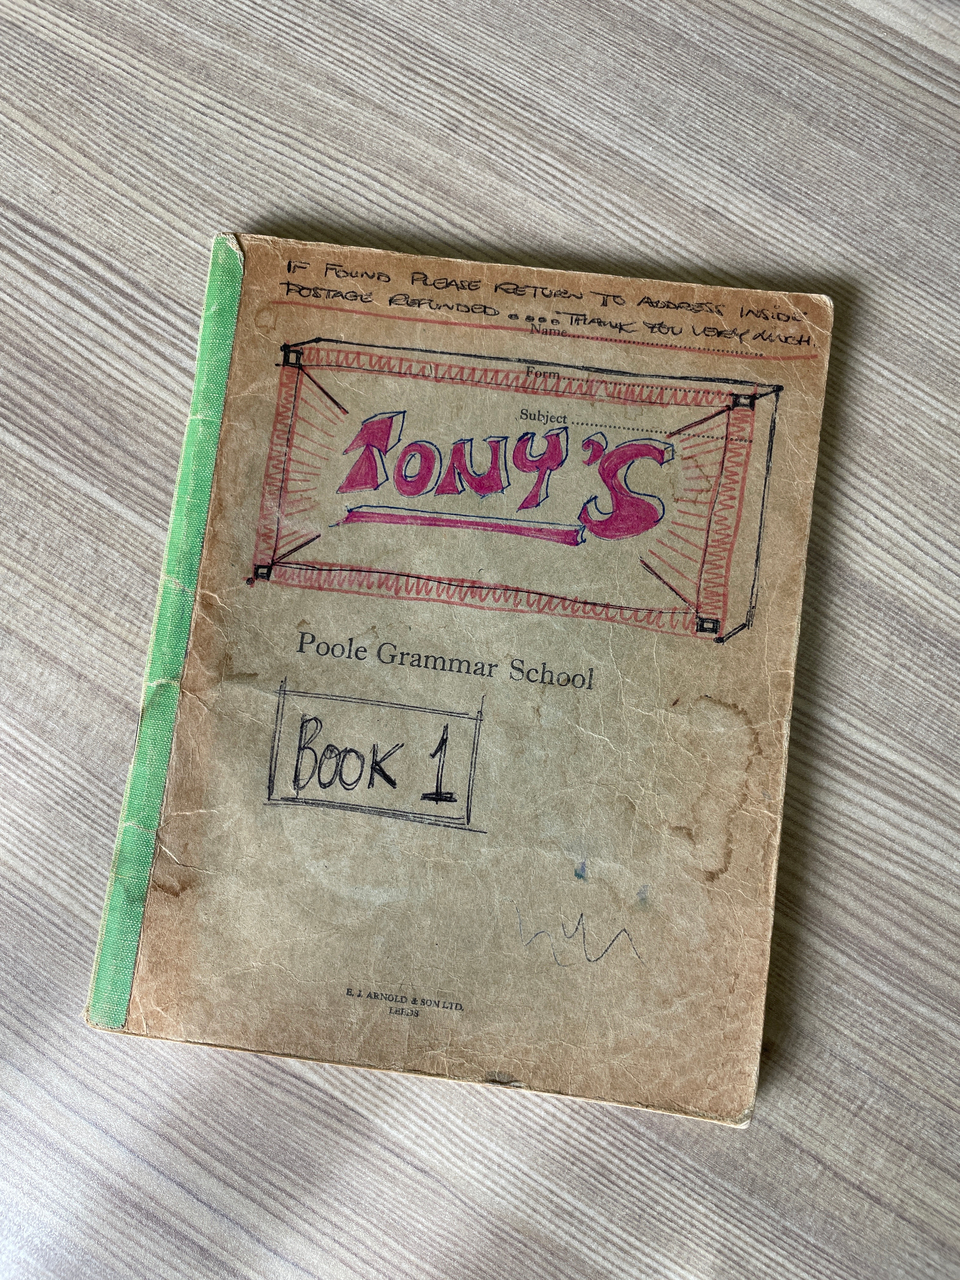 Tony's Songbook by Simon Ostheimer